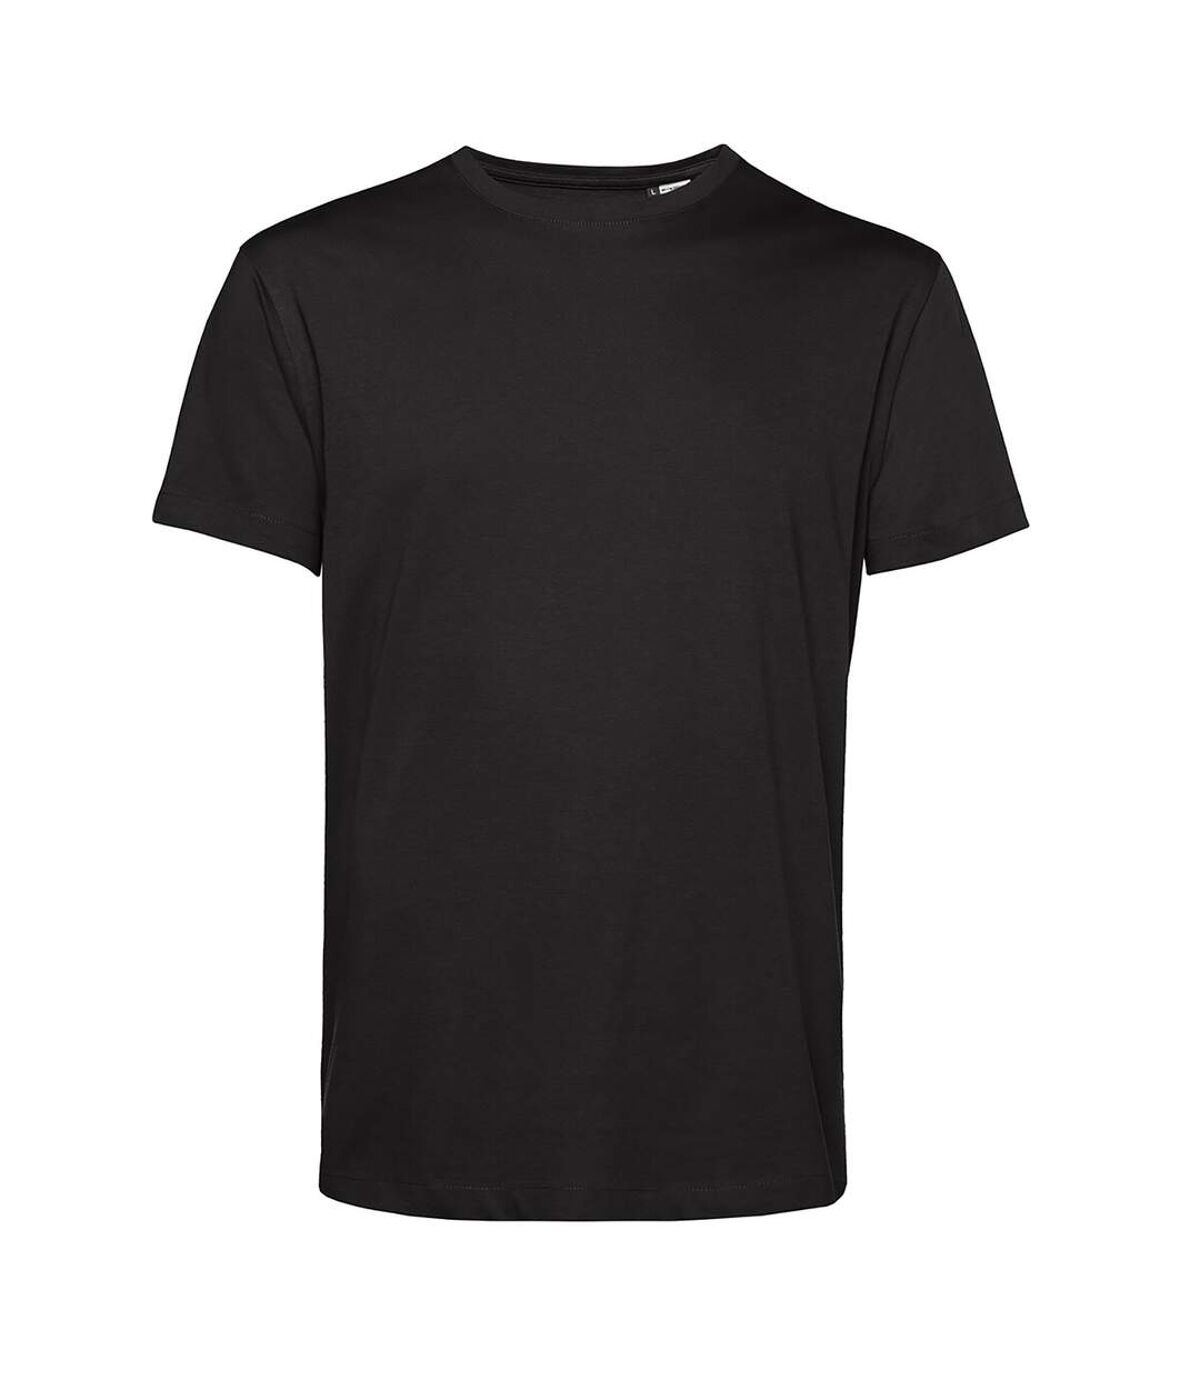 B&C - T-shirt E150 - Homme (Noir) - UTBC4658